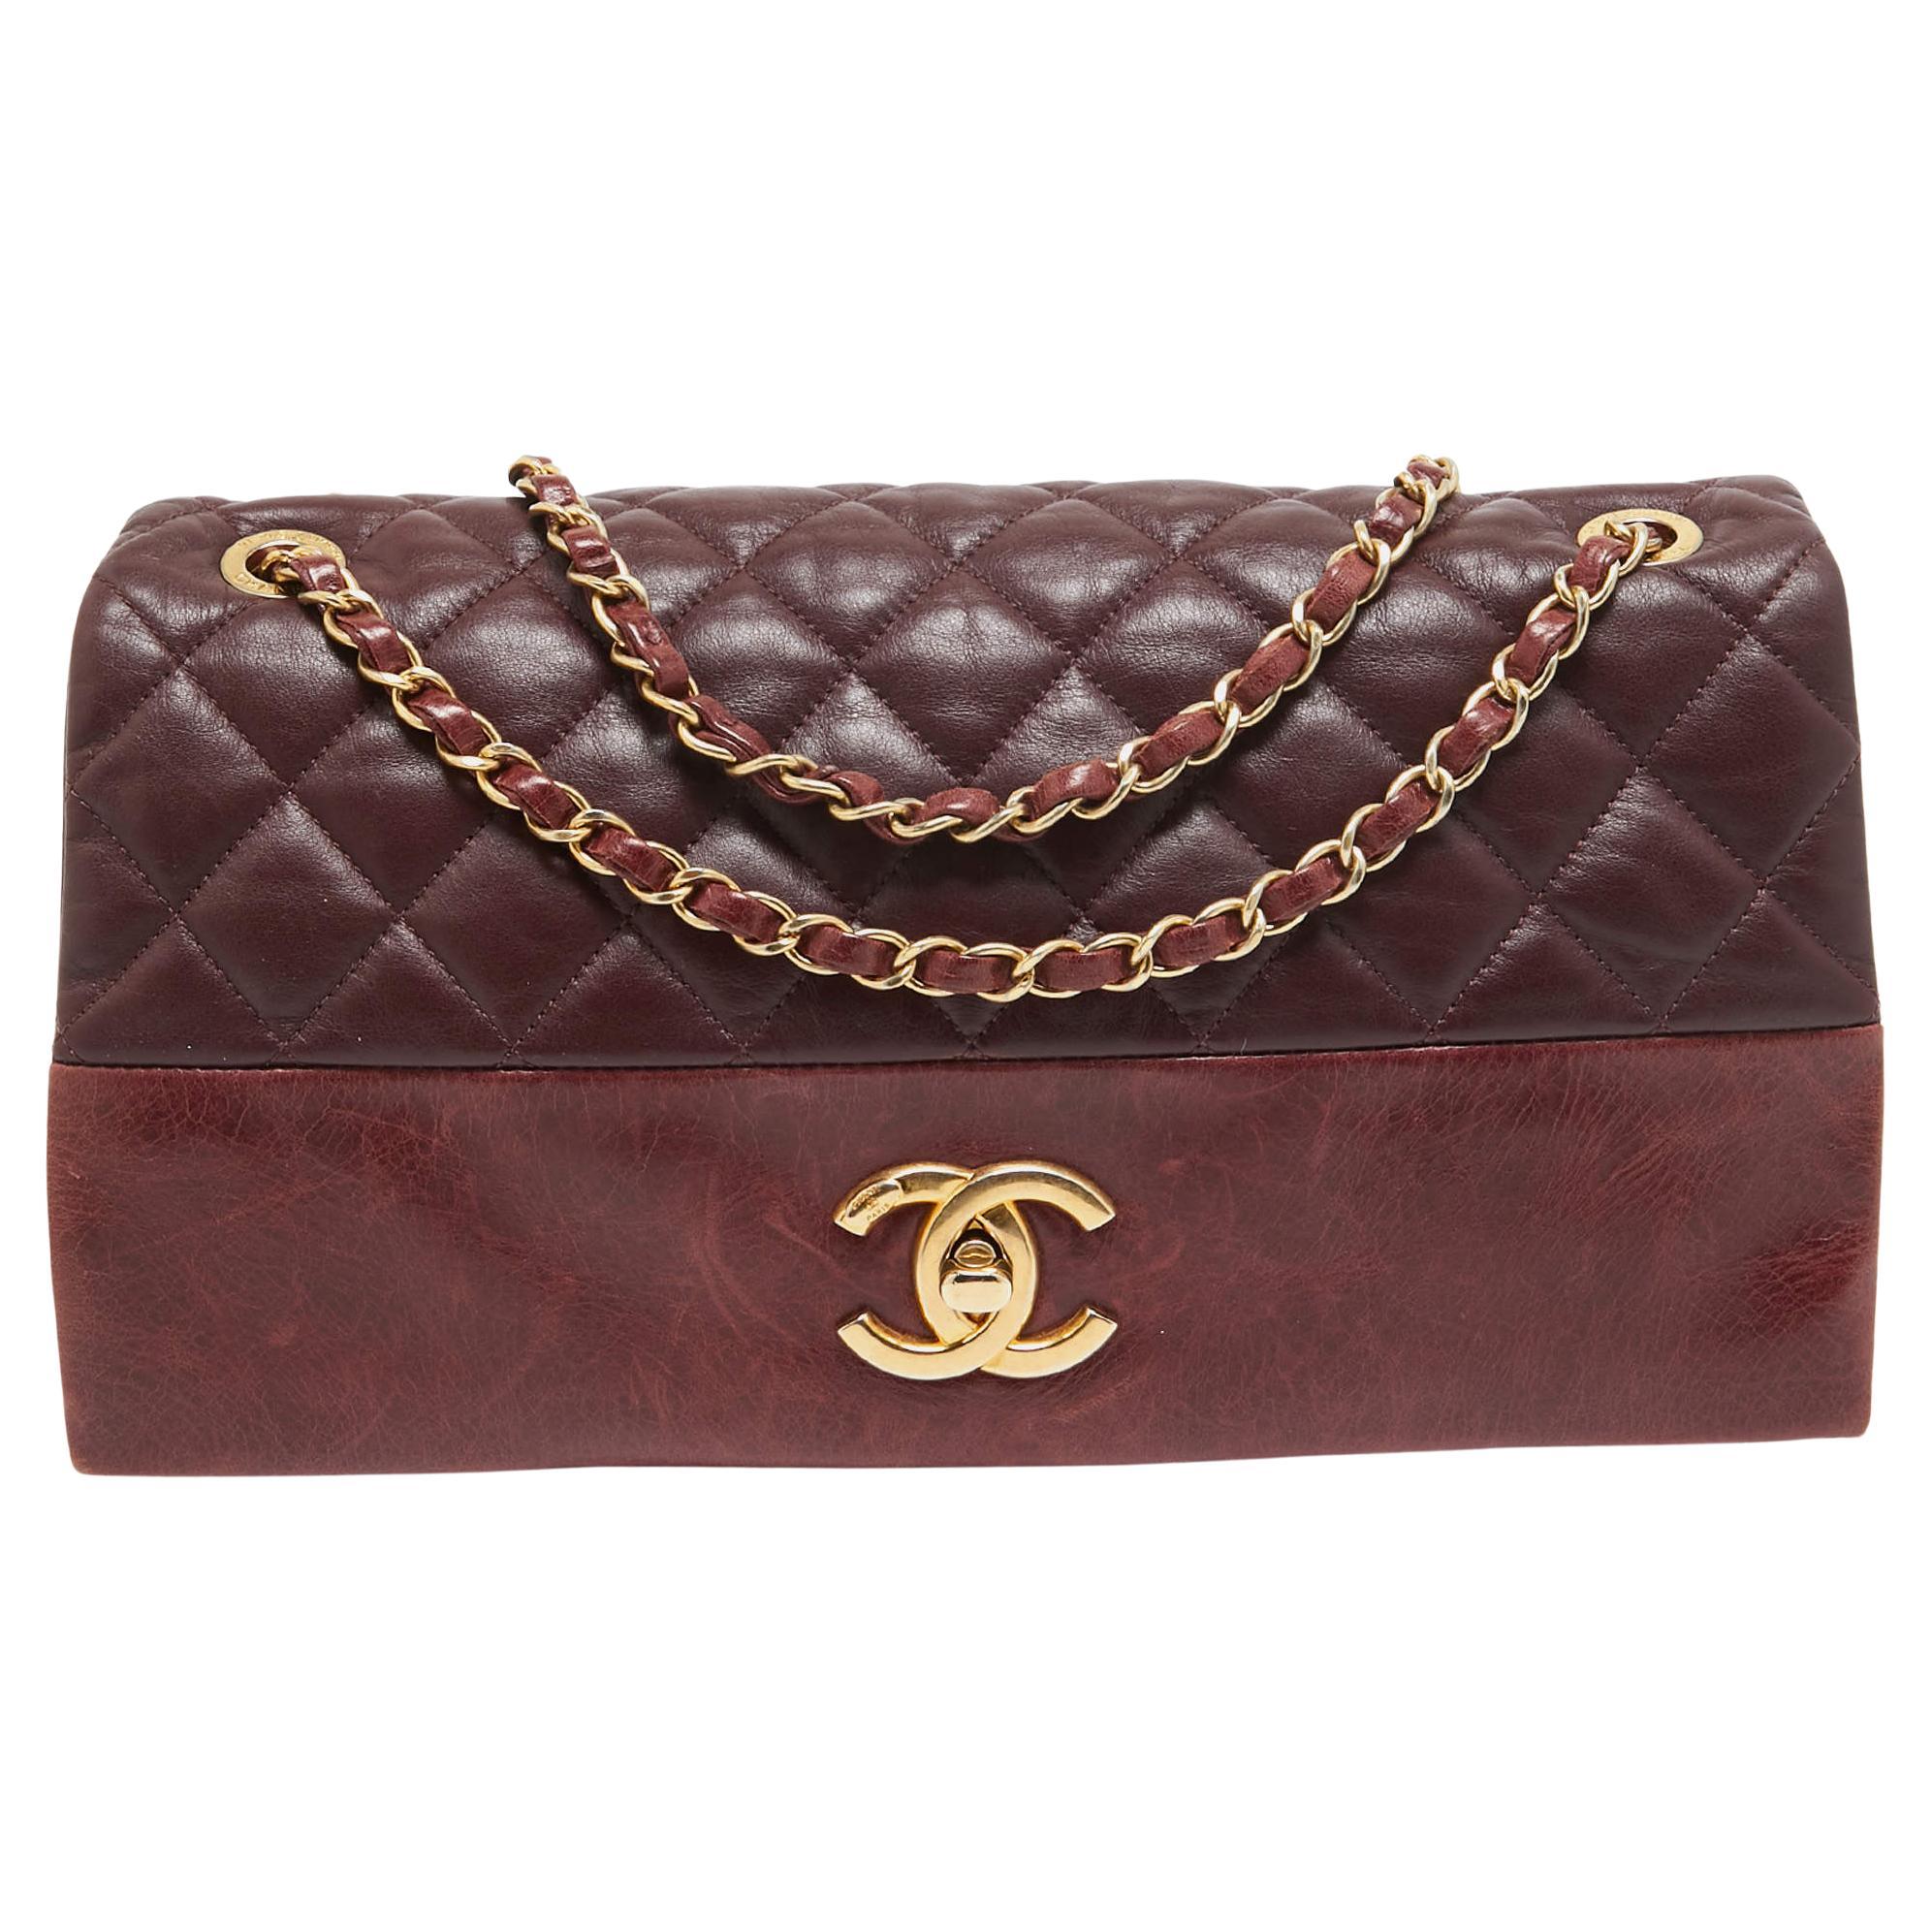 Chanel Burgundy Quilted Leather Soft Elegance Flap Bag For Sale